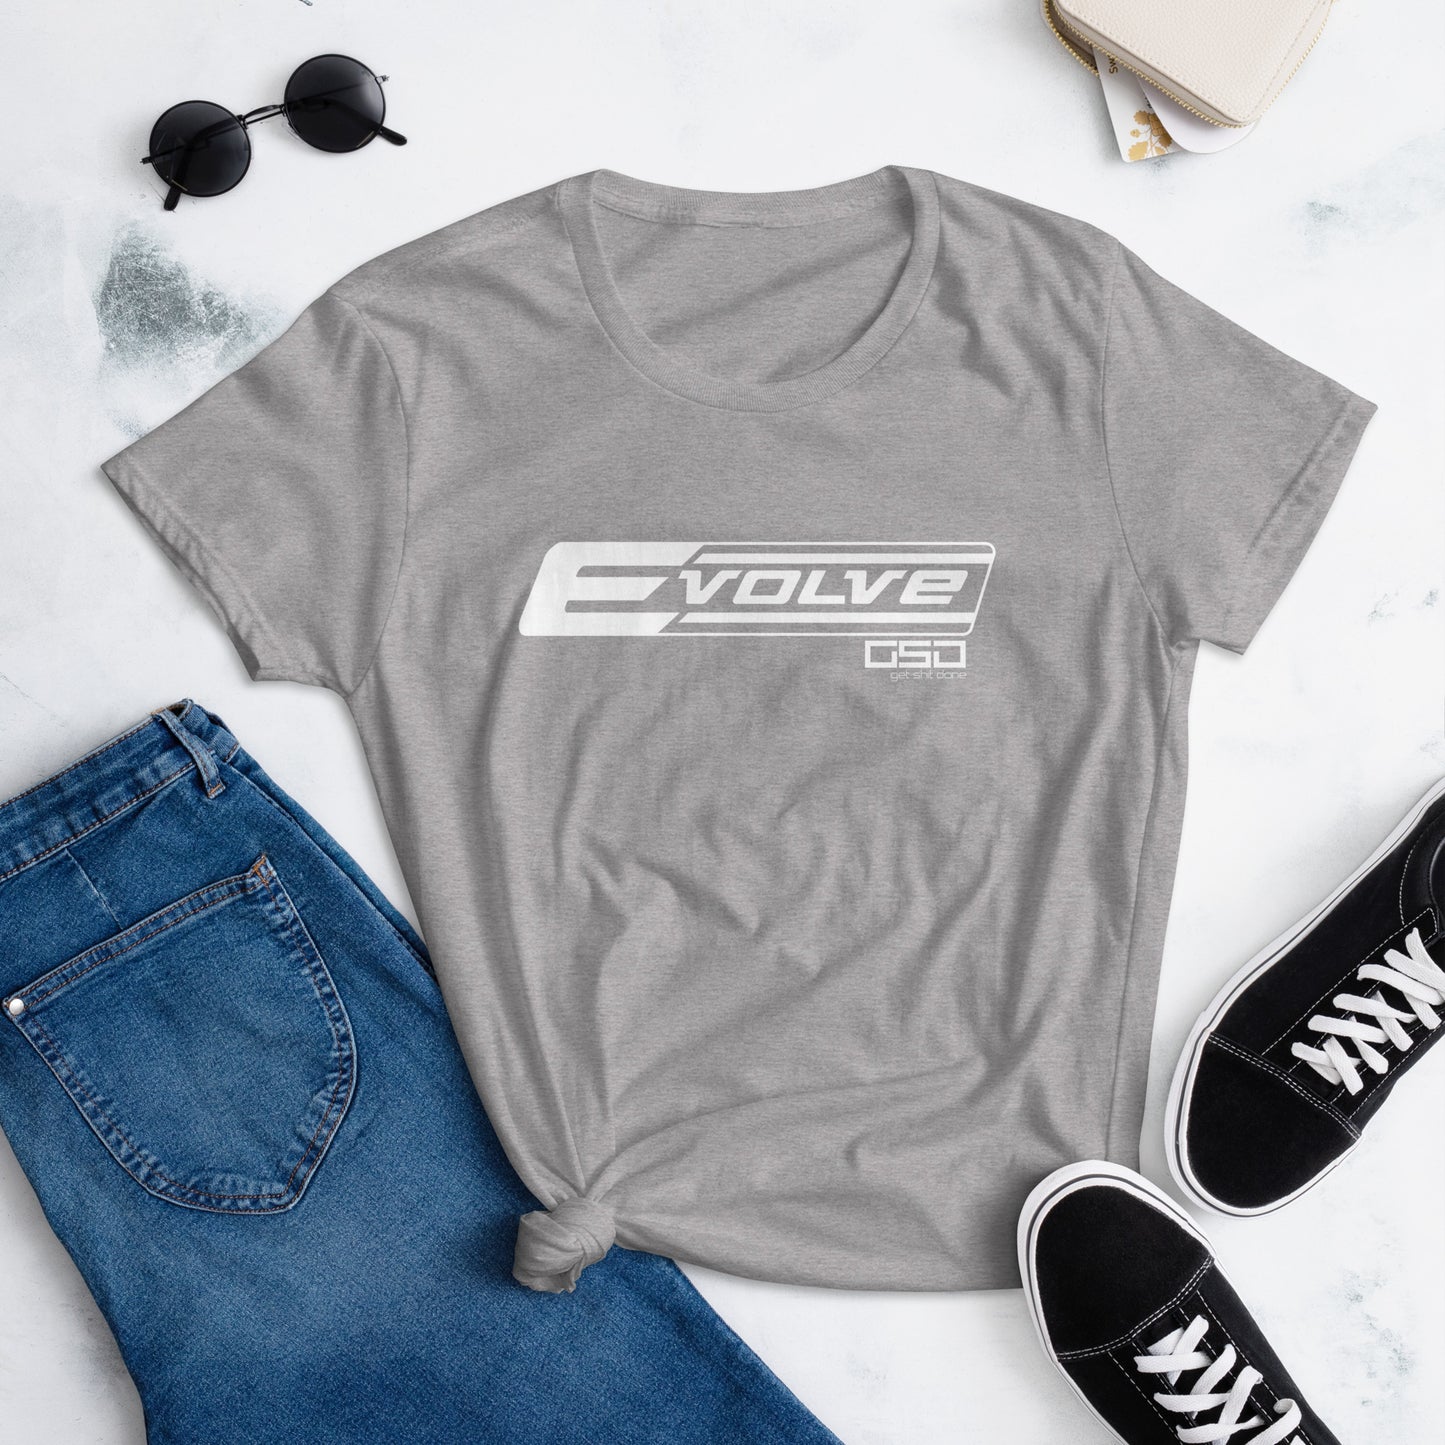 Evolve-Women's short sleeve t-shirt